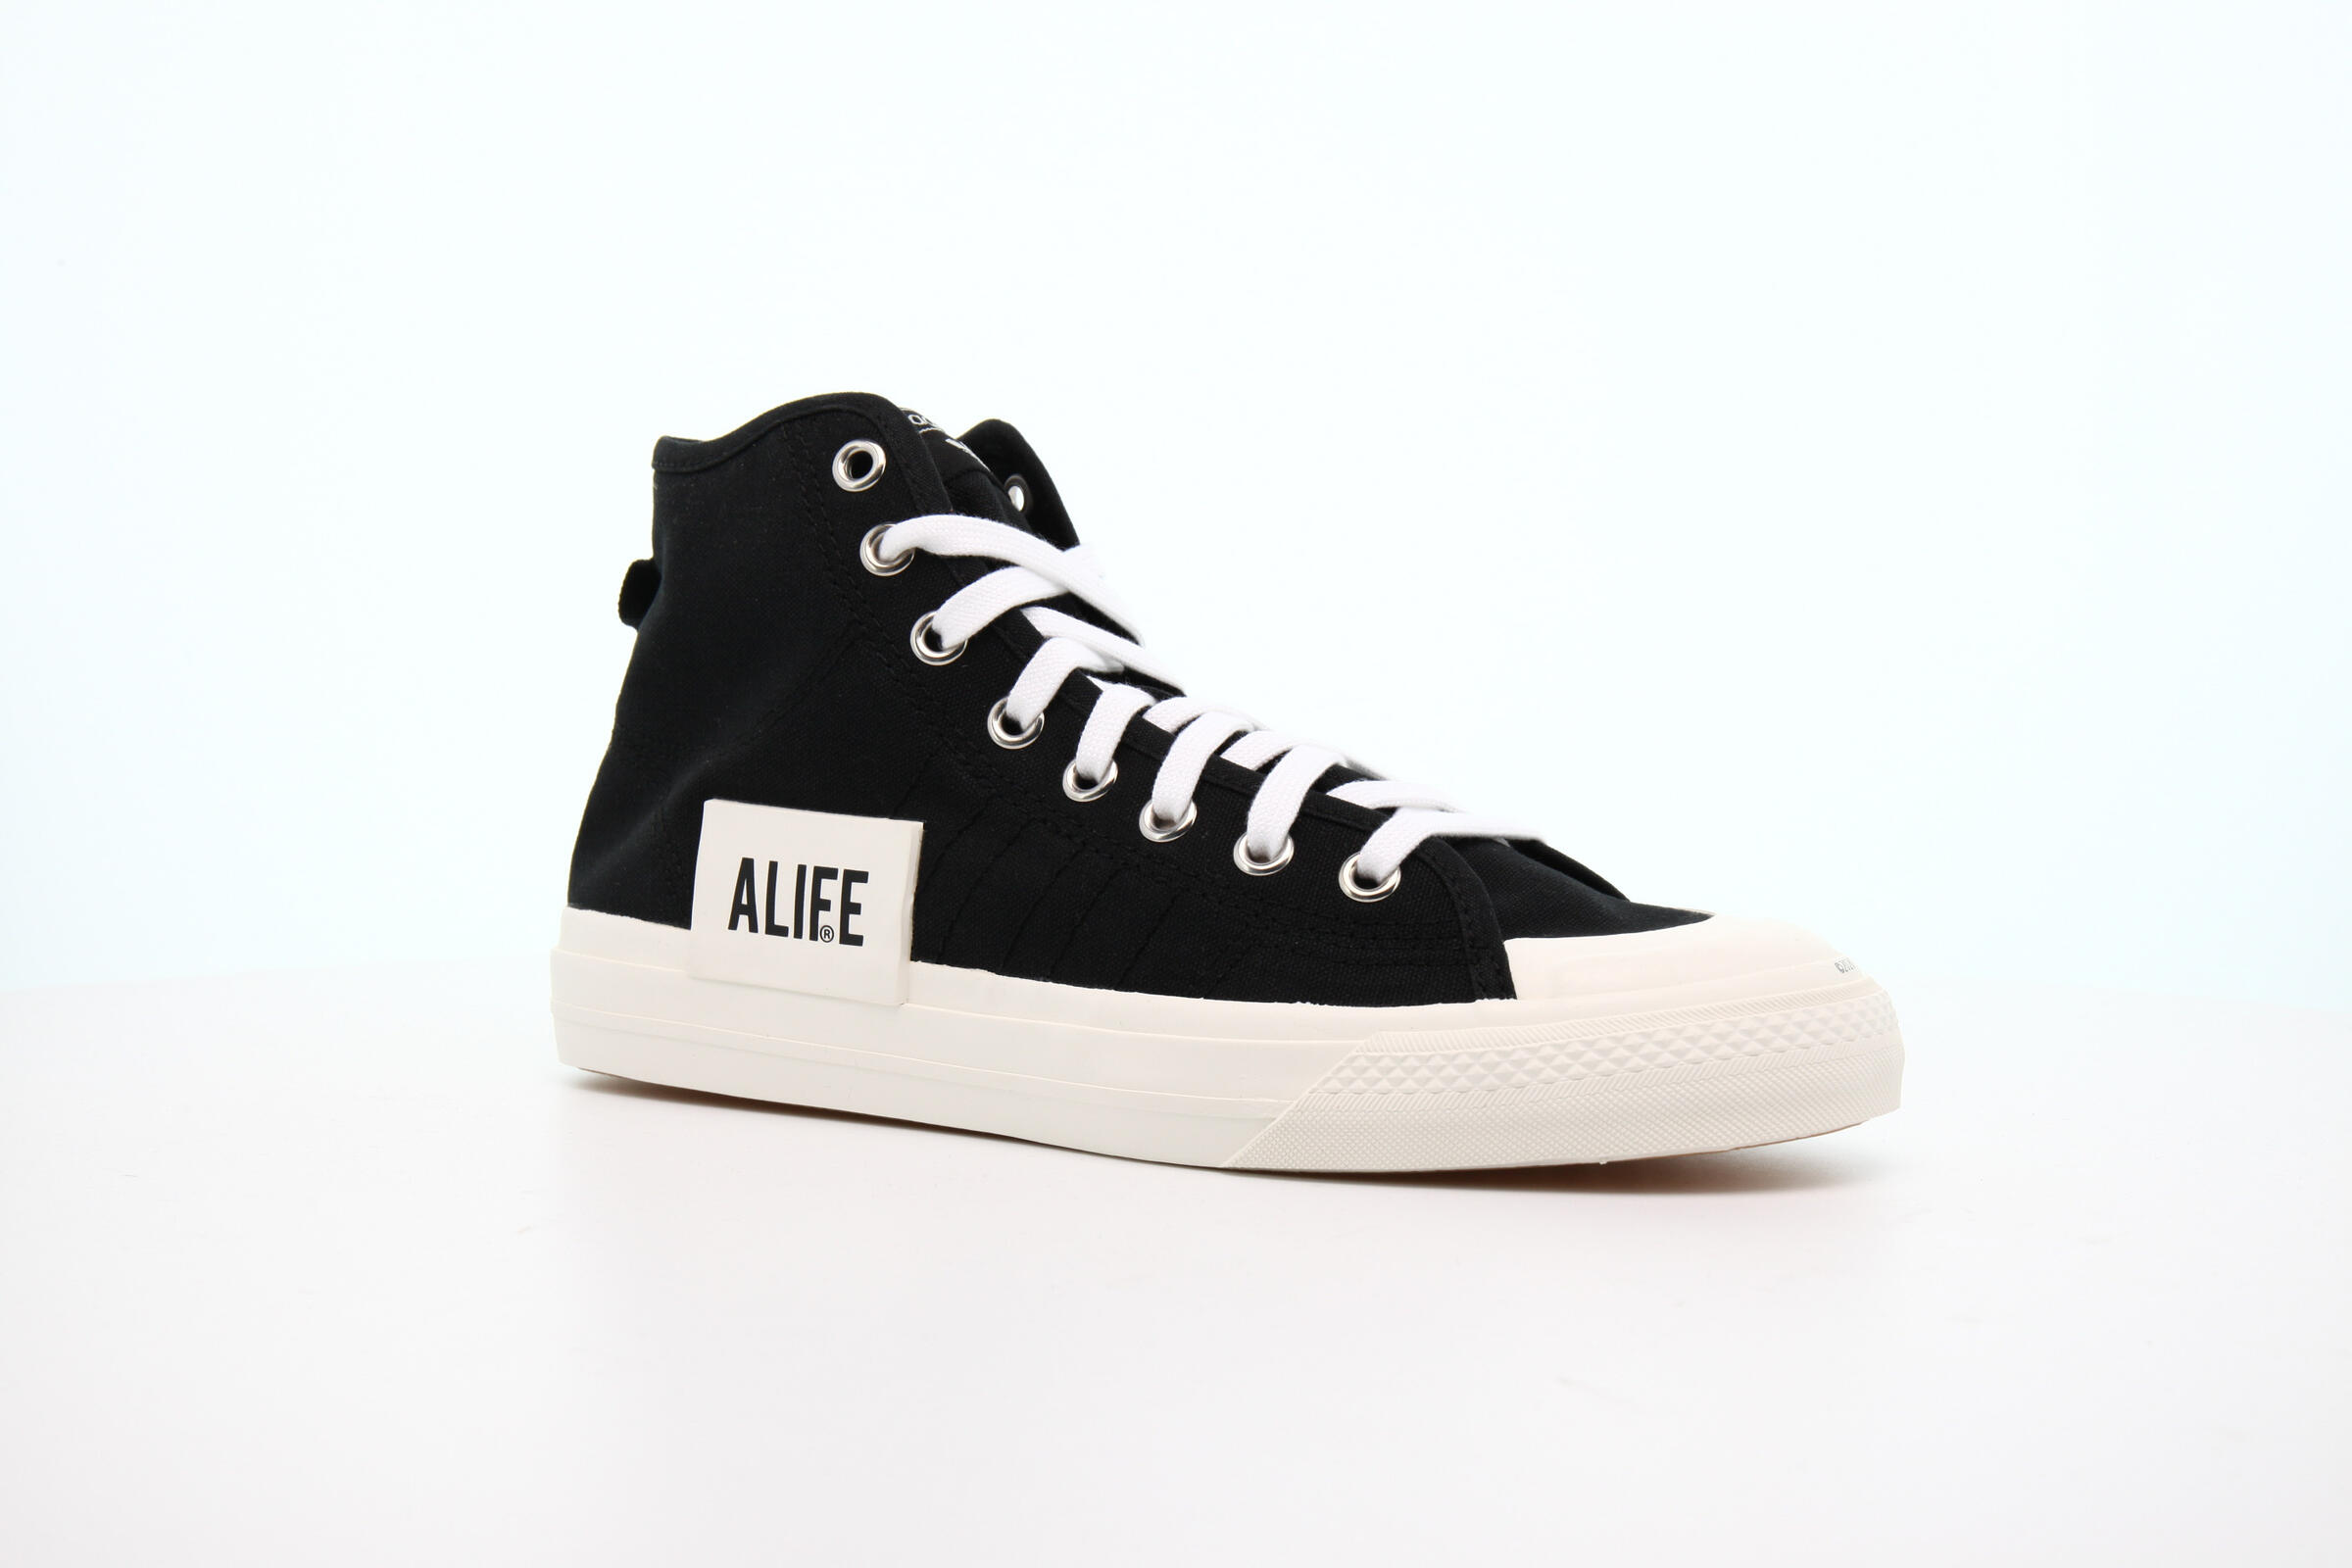 adidas Originals x ALIFE NIZZA HI "CORE BLACK"